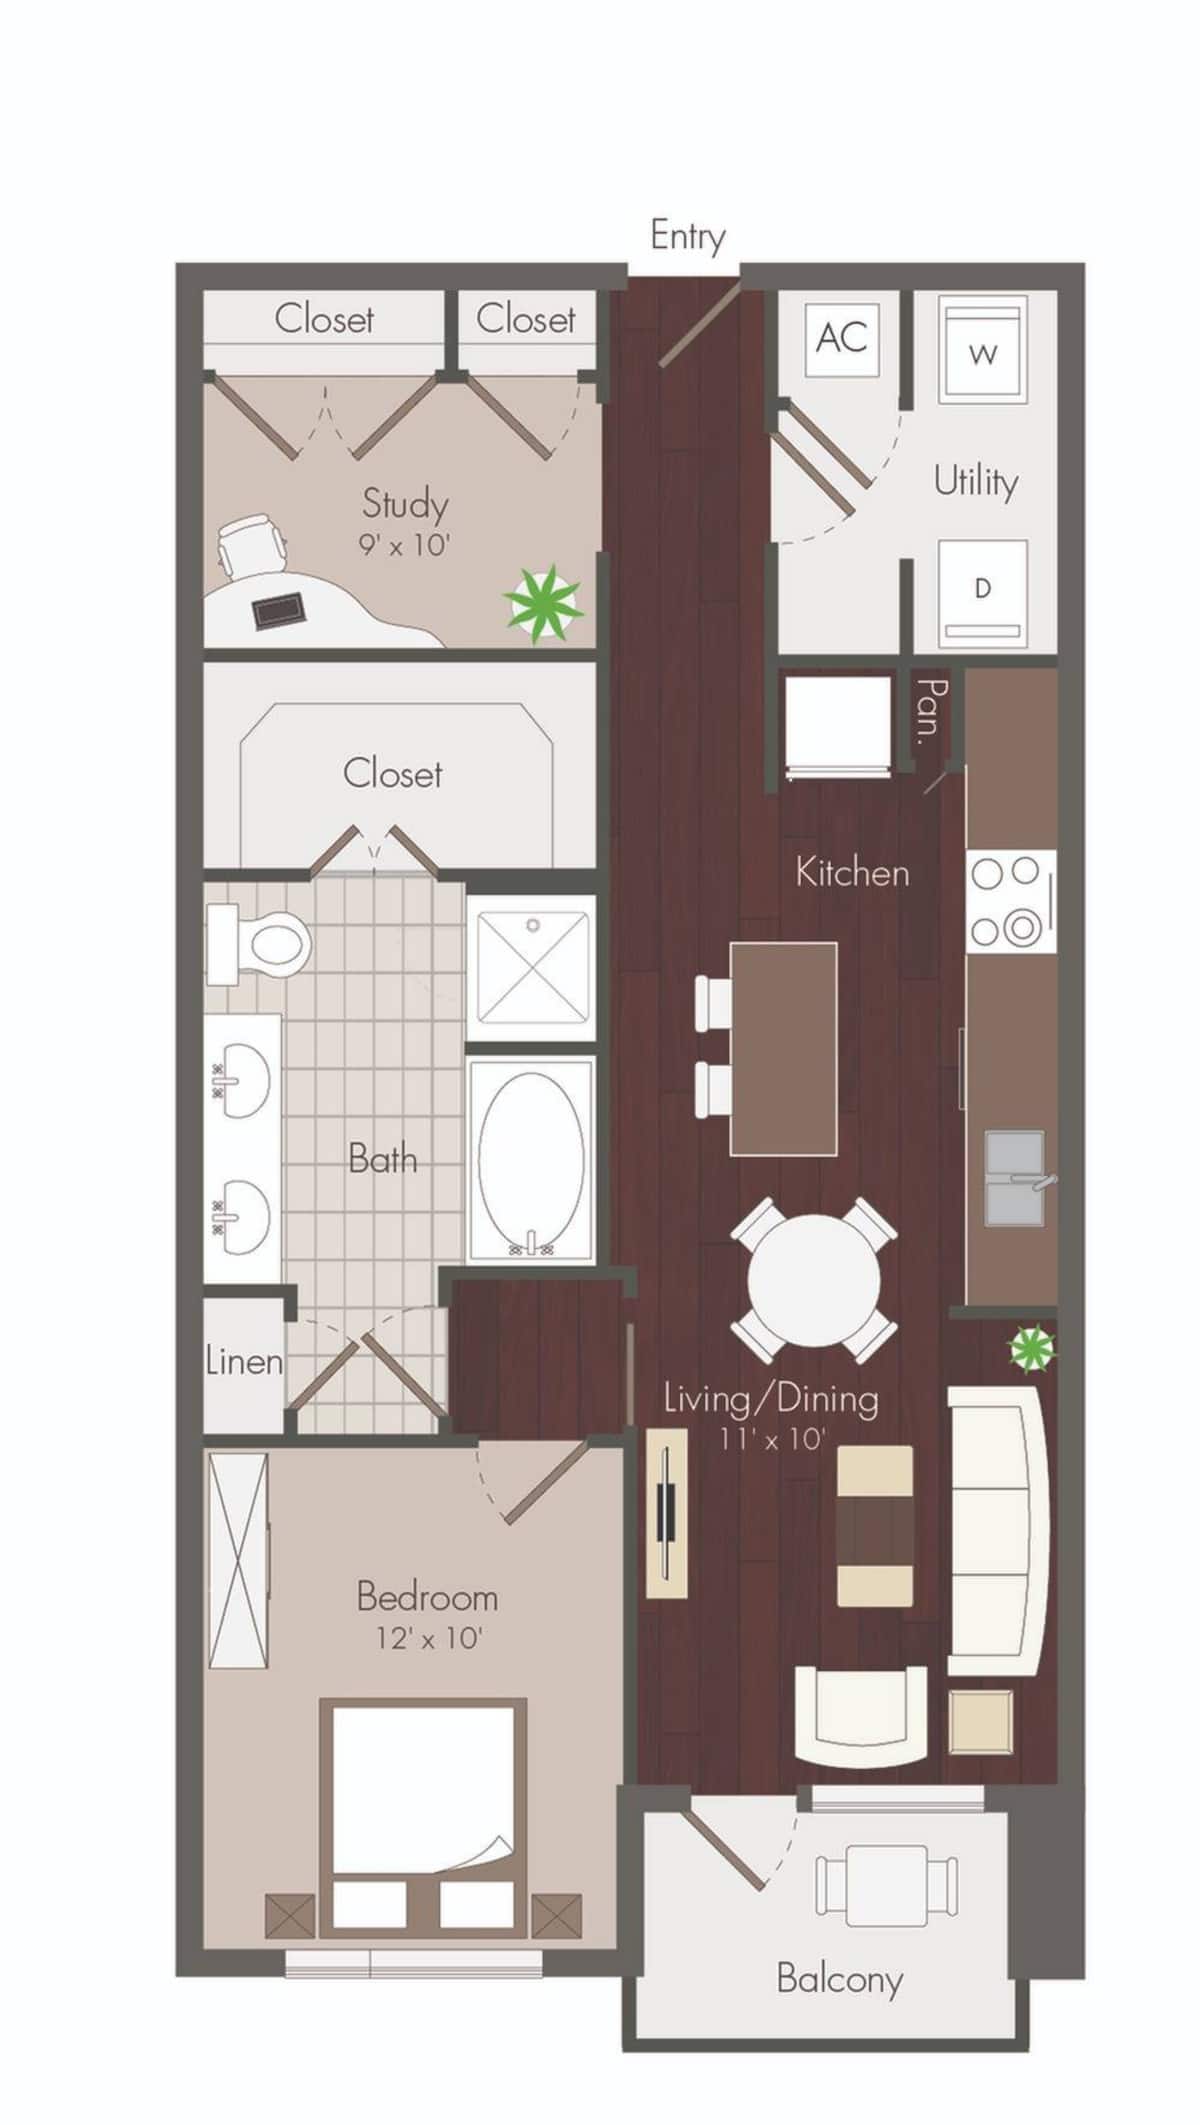 Floorplan diagram for Haskell, showing 1 bedroom